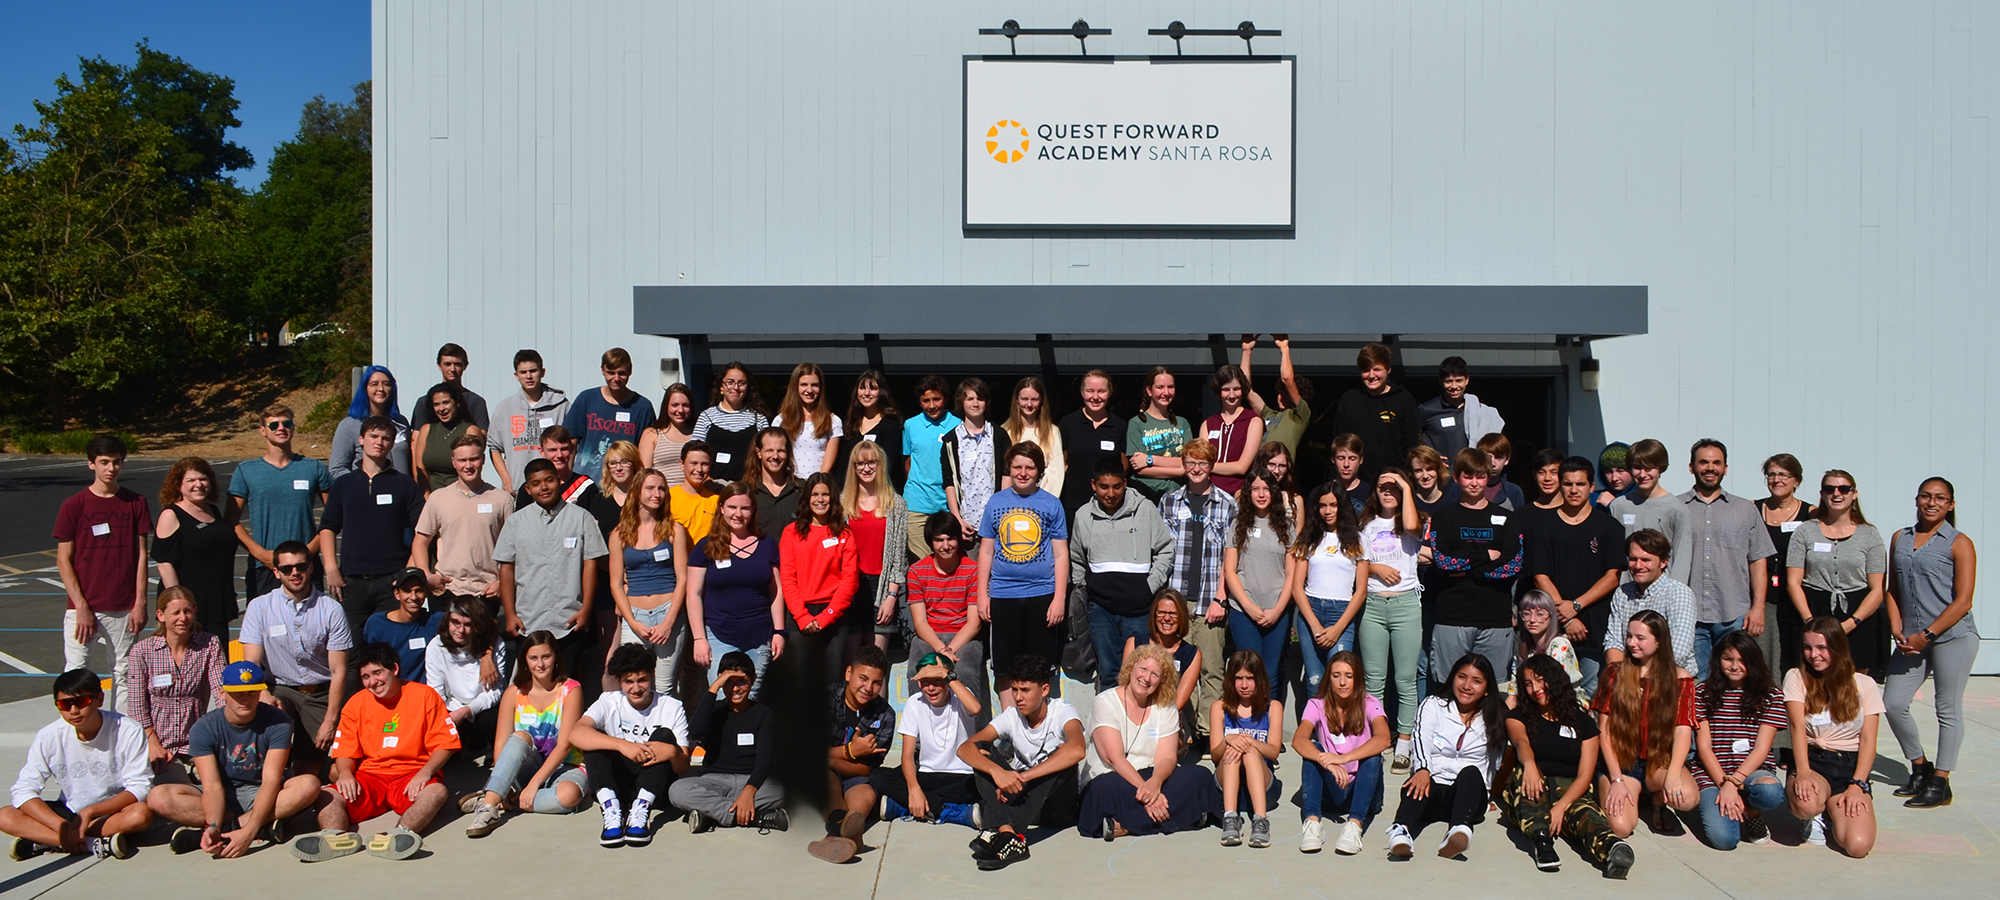 Quest Forward Academy Santa Rosa on their first day of school 2019.